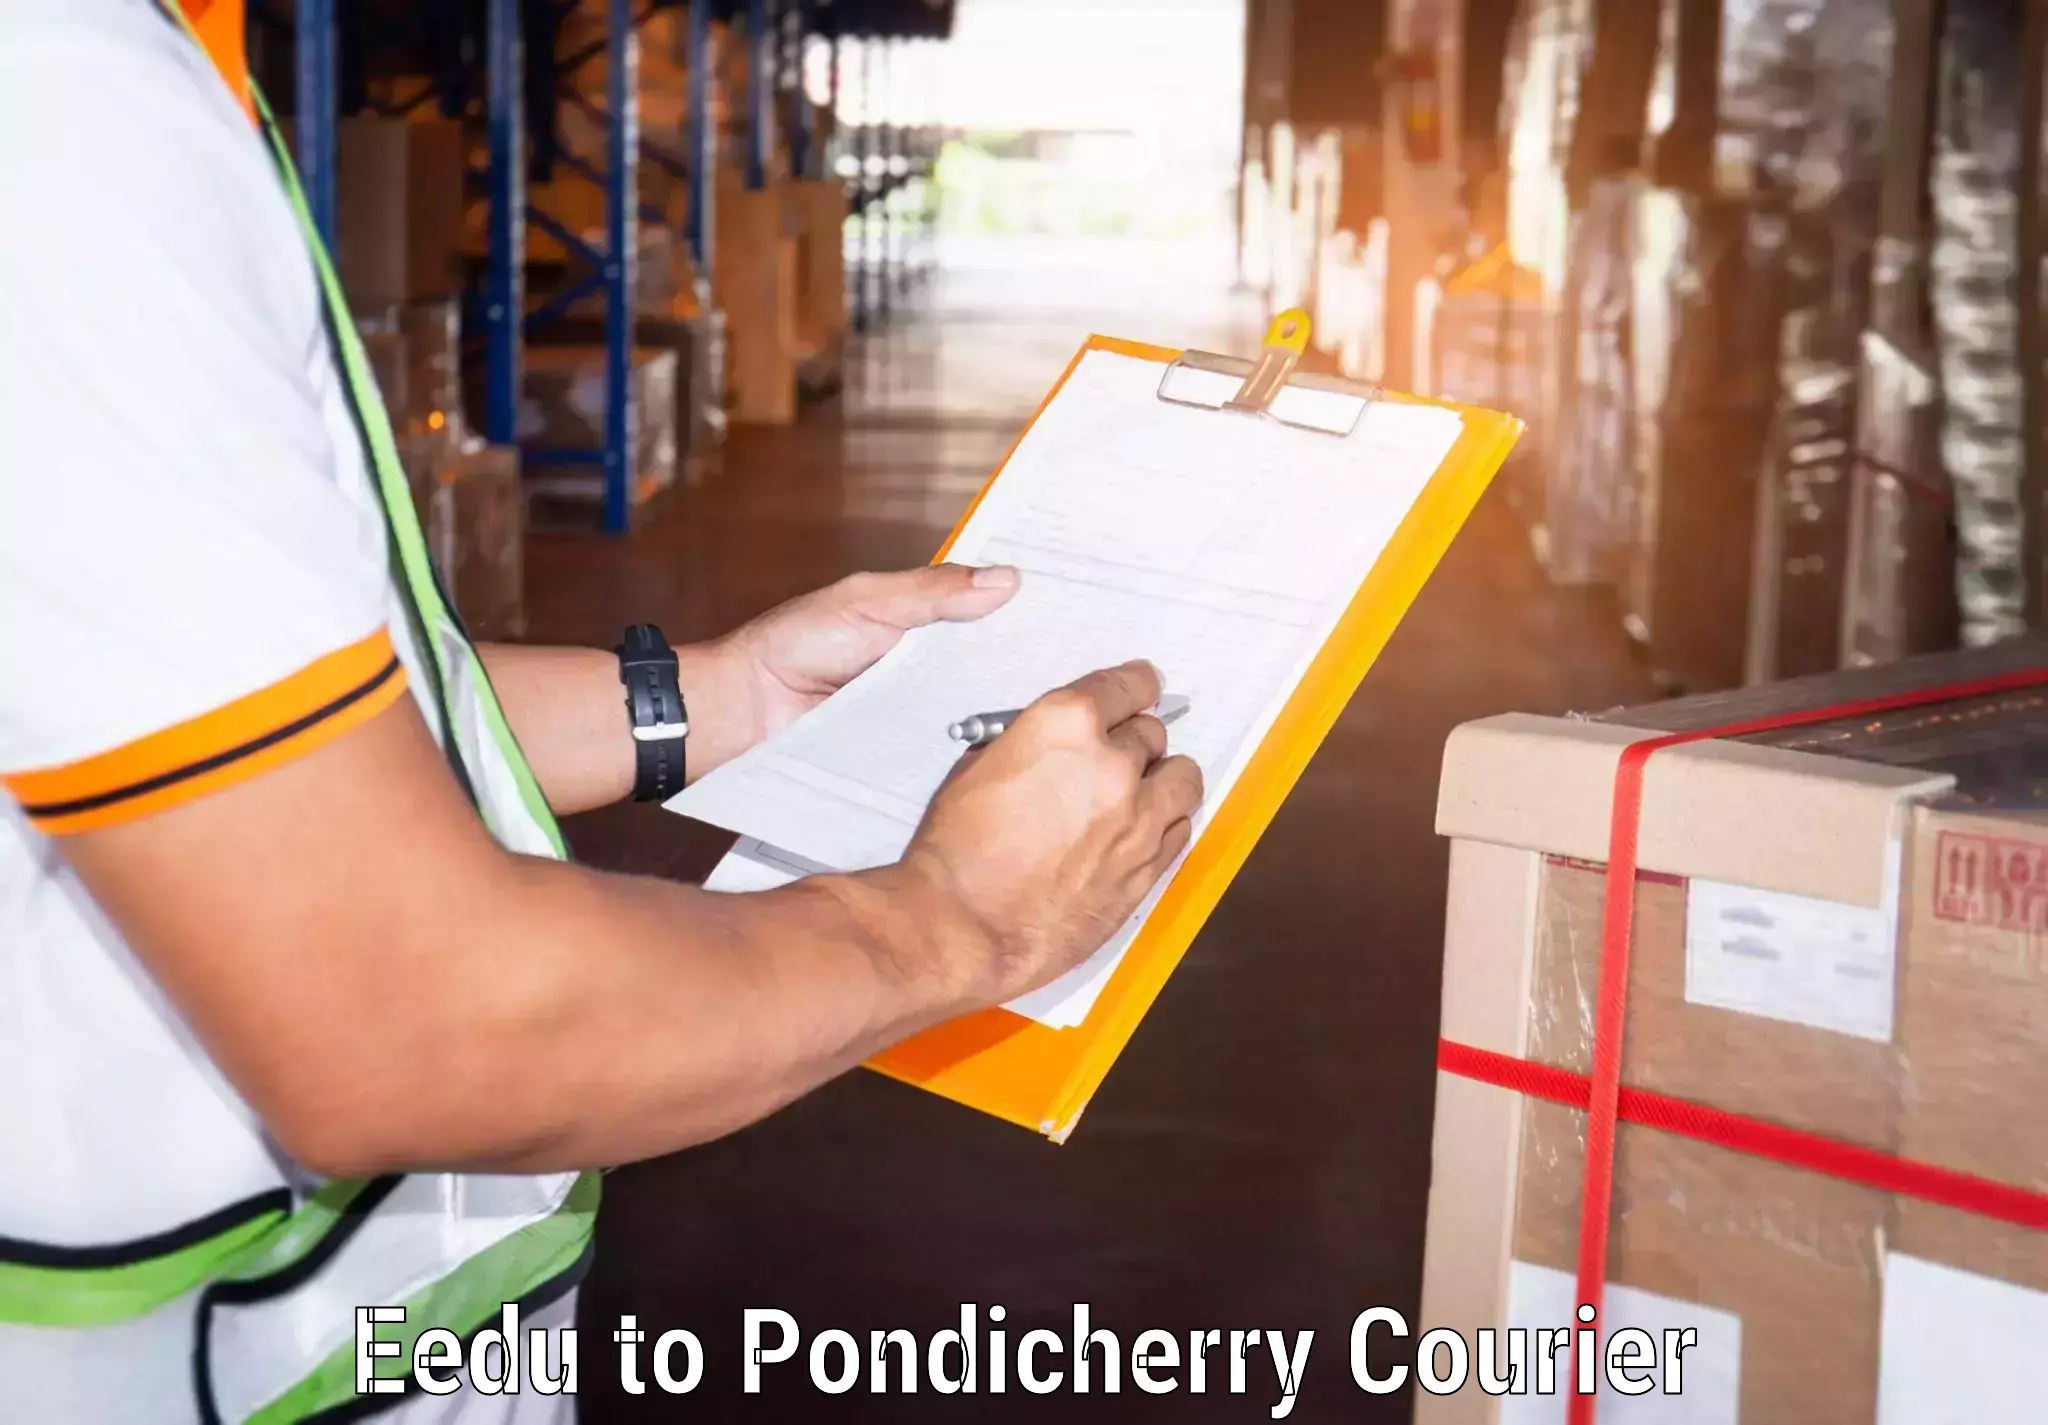 Efficient courier operations Eedu to Pondicherry